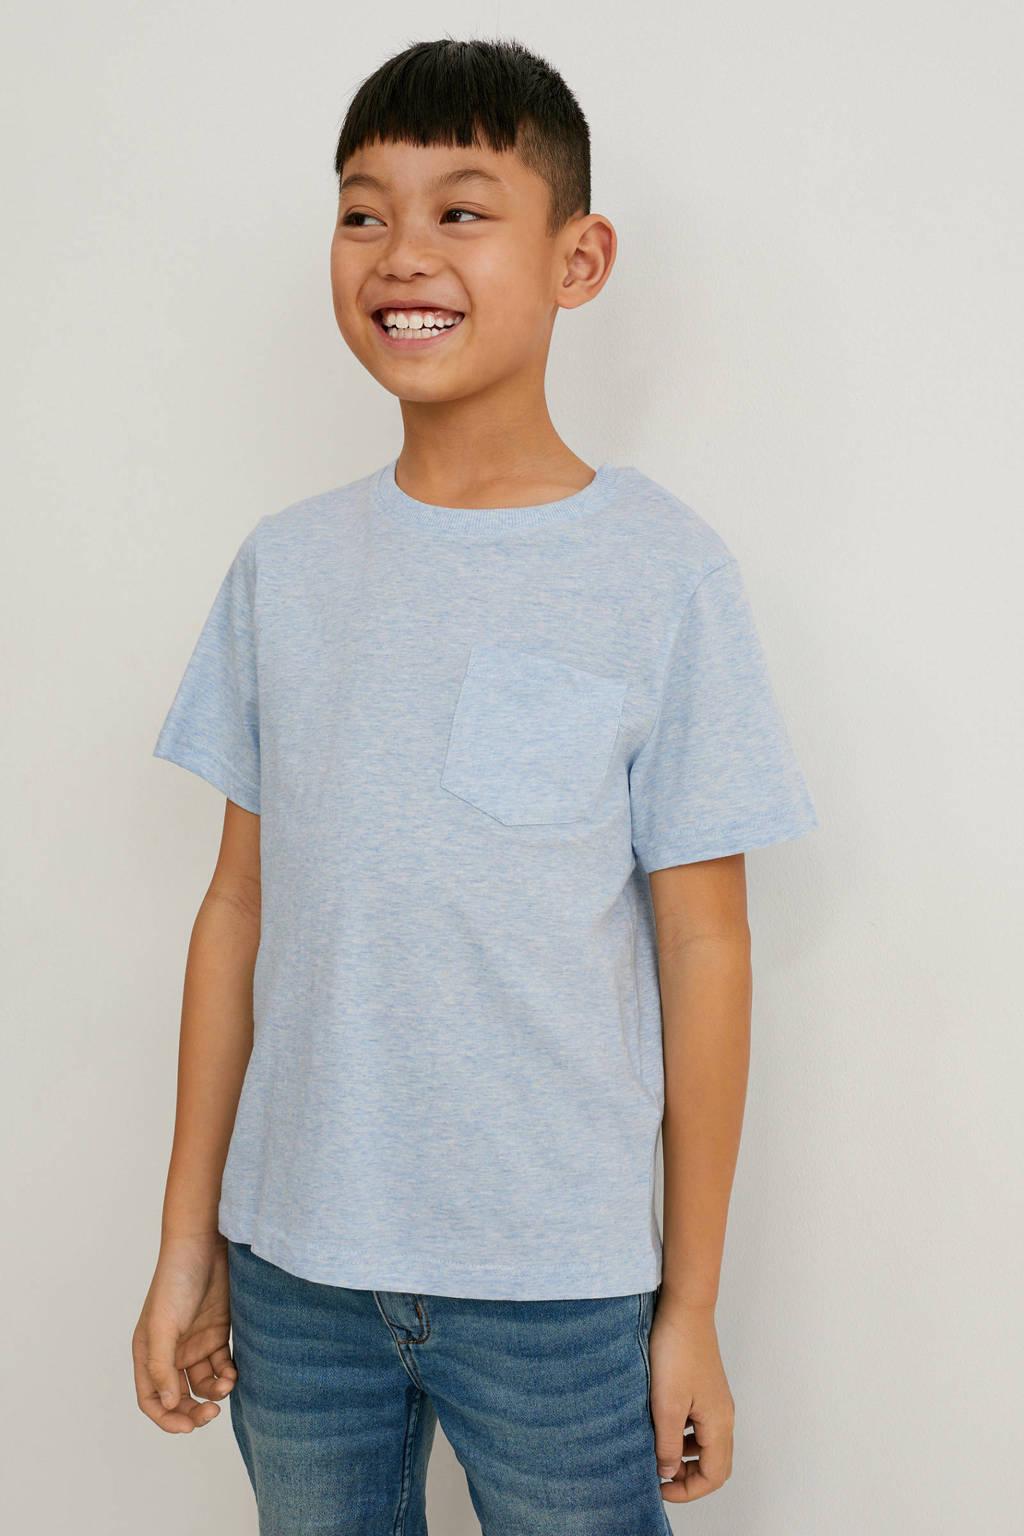 C&A T-shirt - set van 4 wit/grijs/blauw